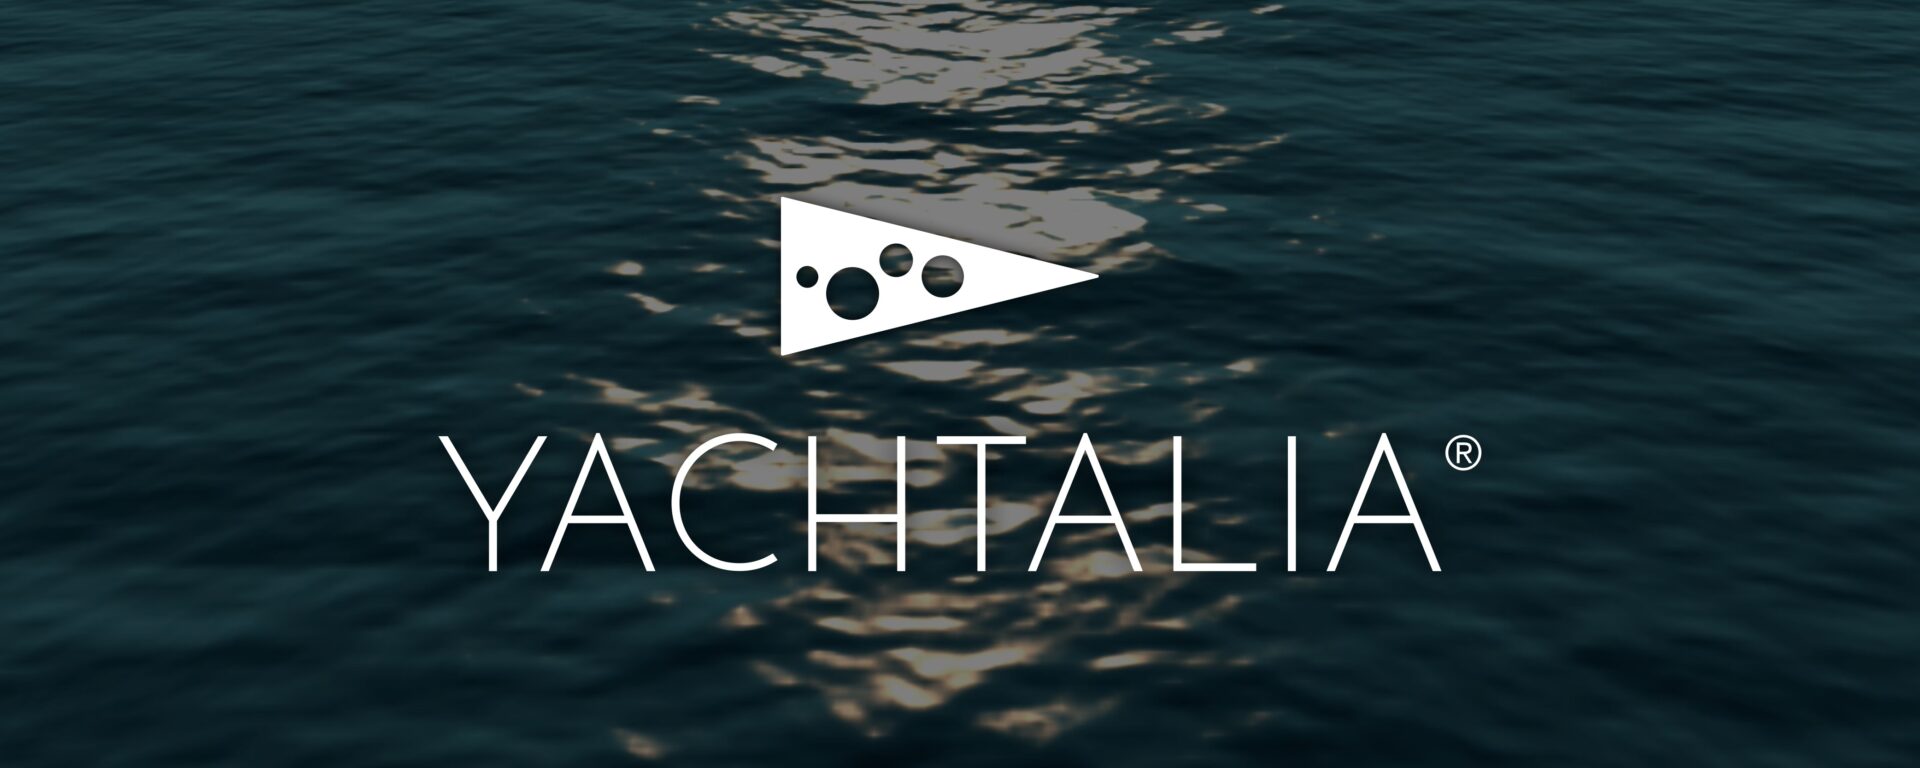 Yachtalia header 1